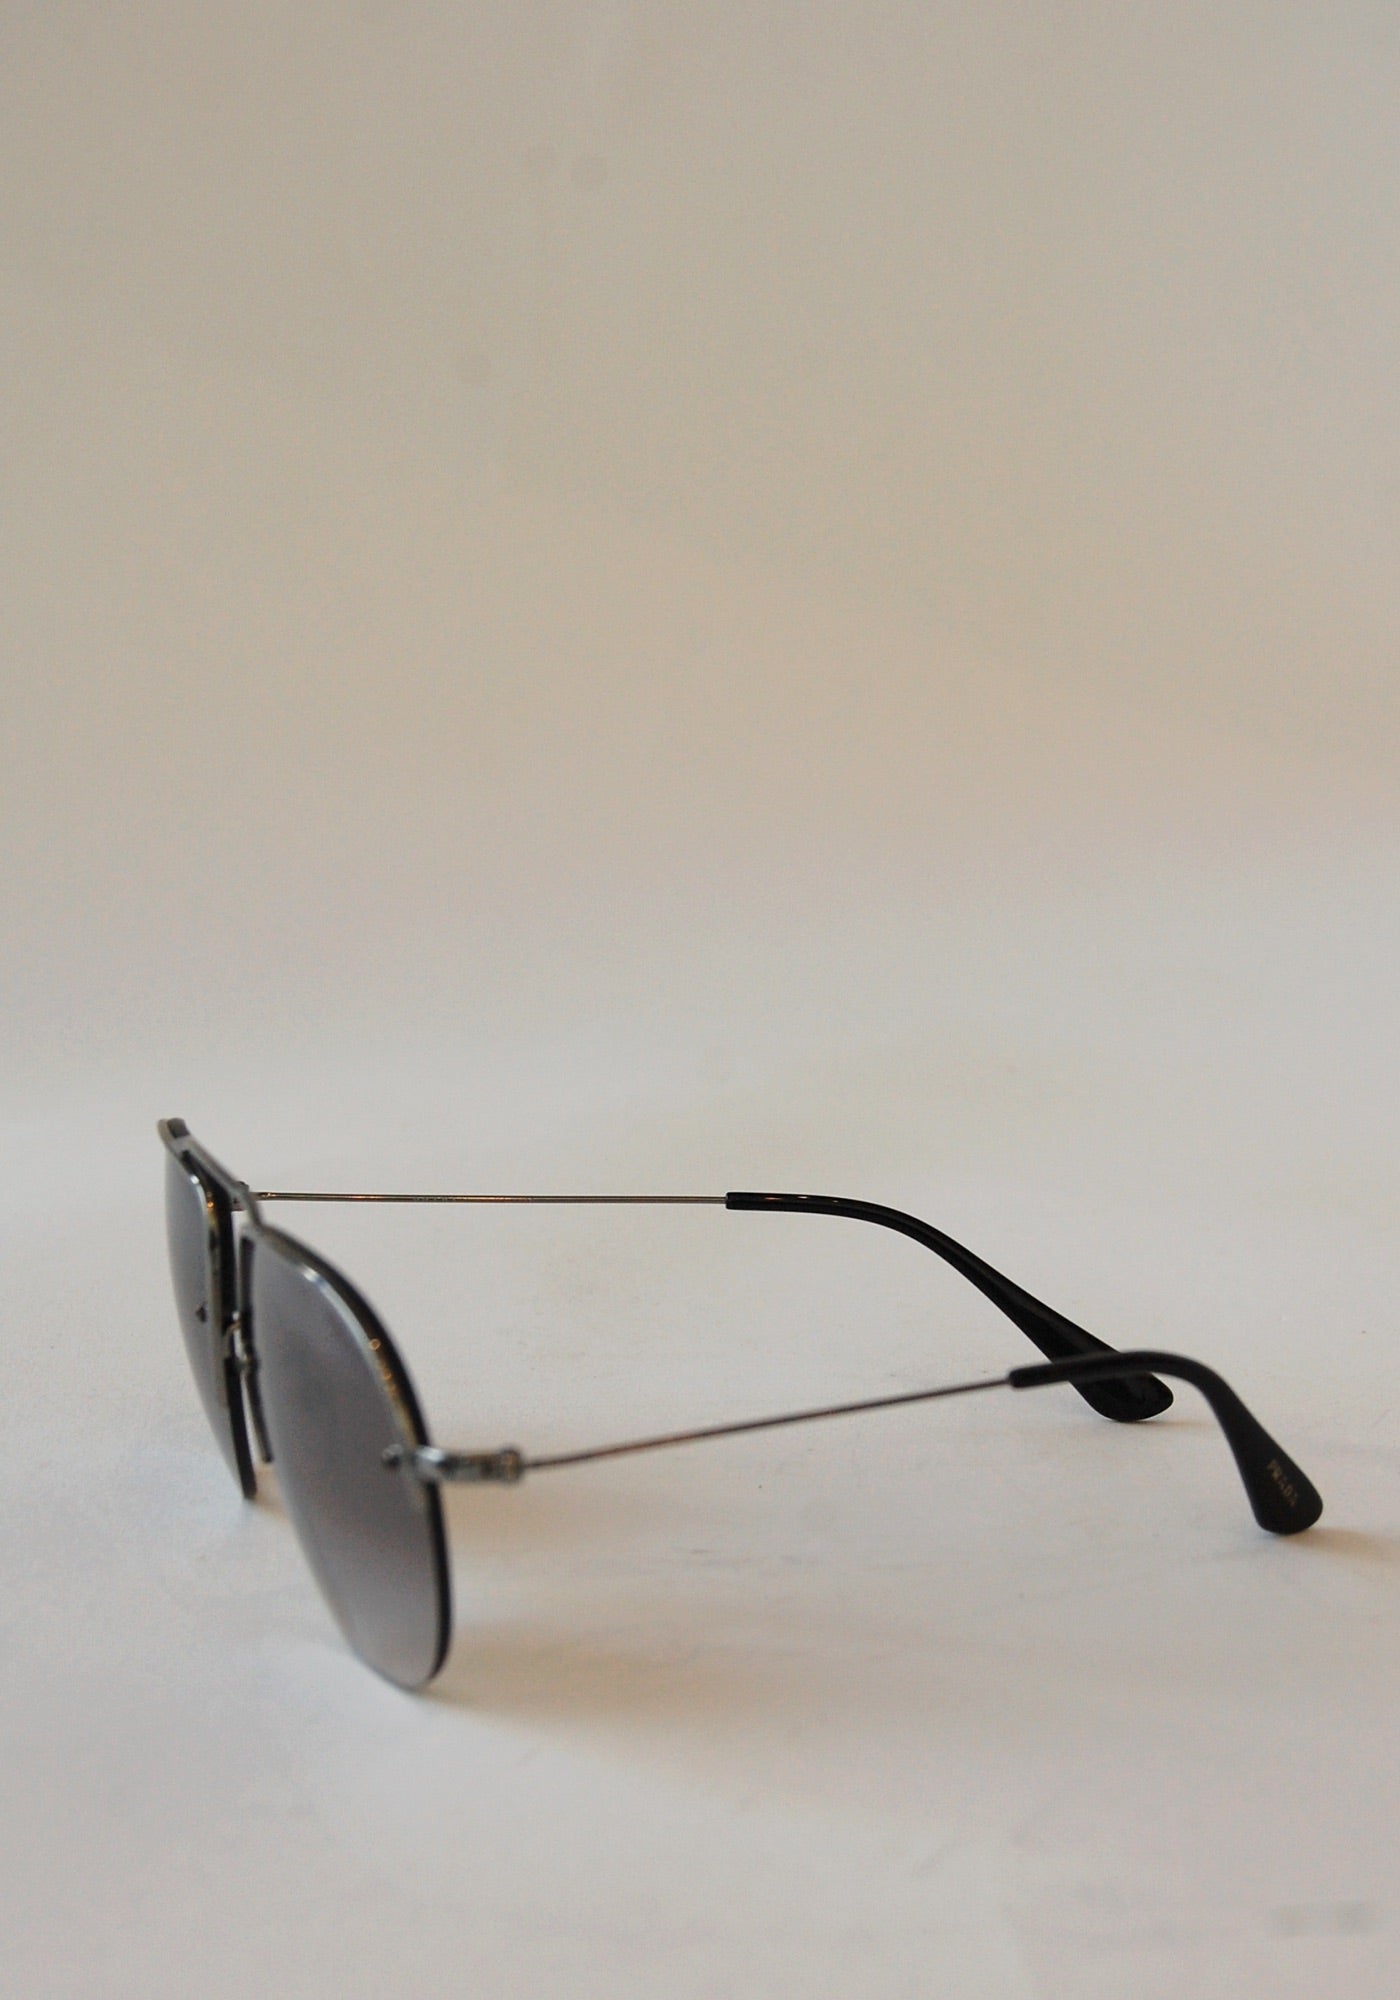 Prada Silver Sunglasses